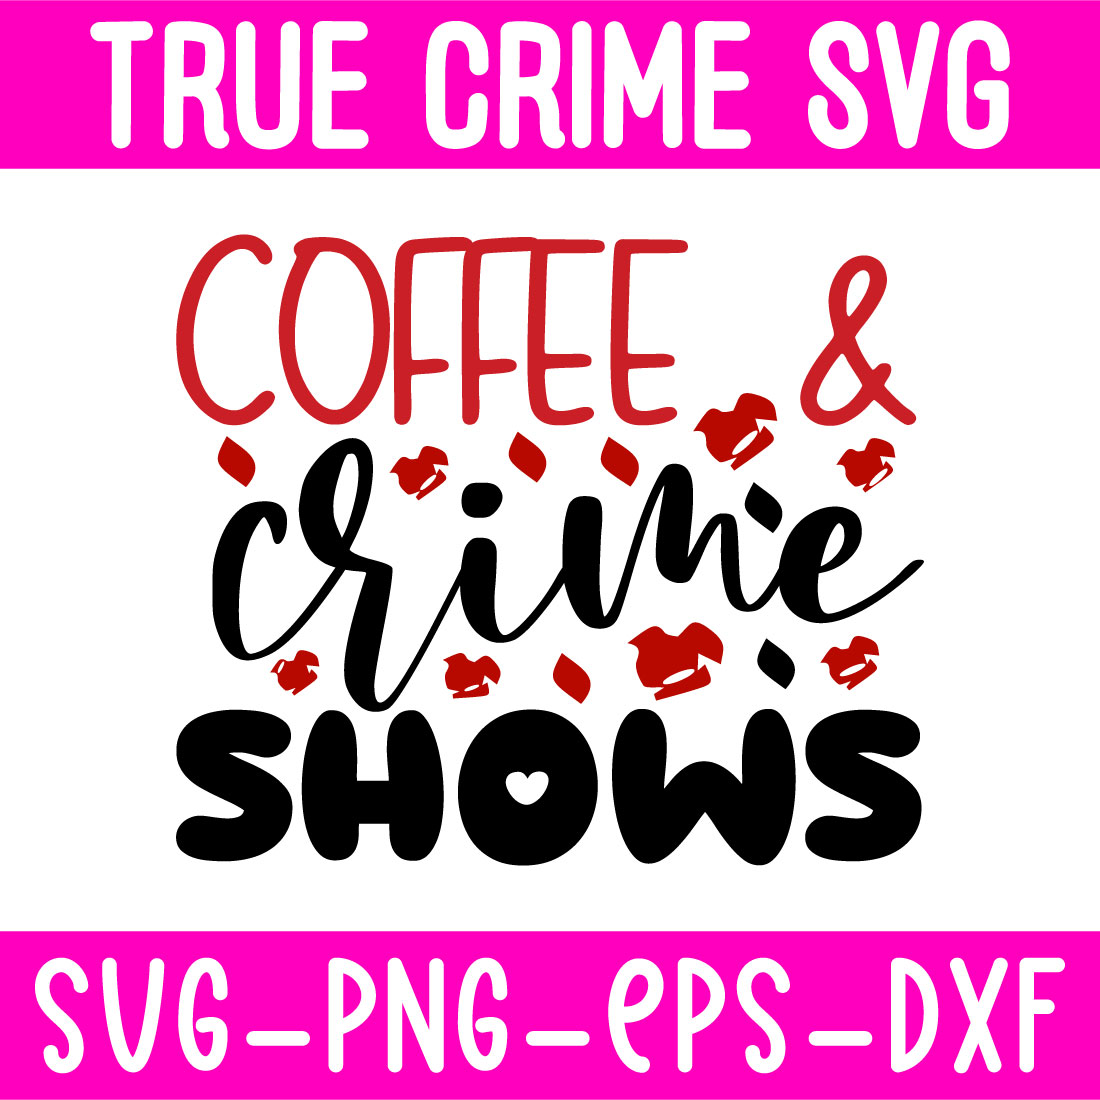 True Crime Svg cover image.